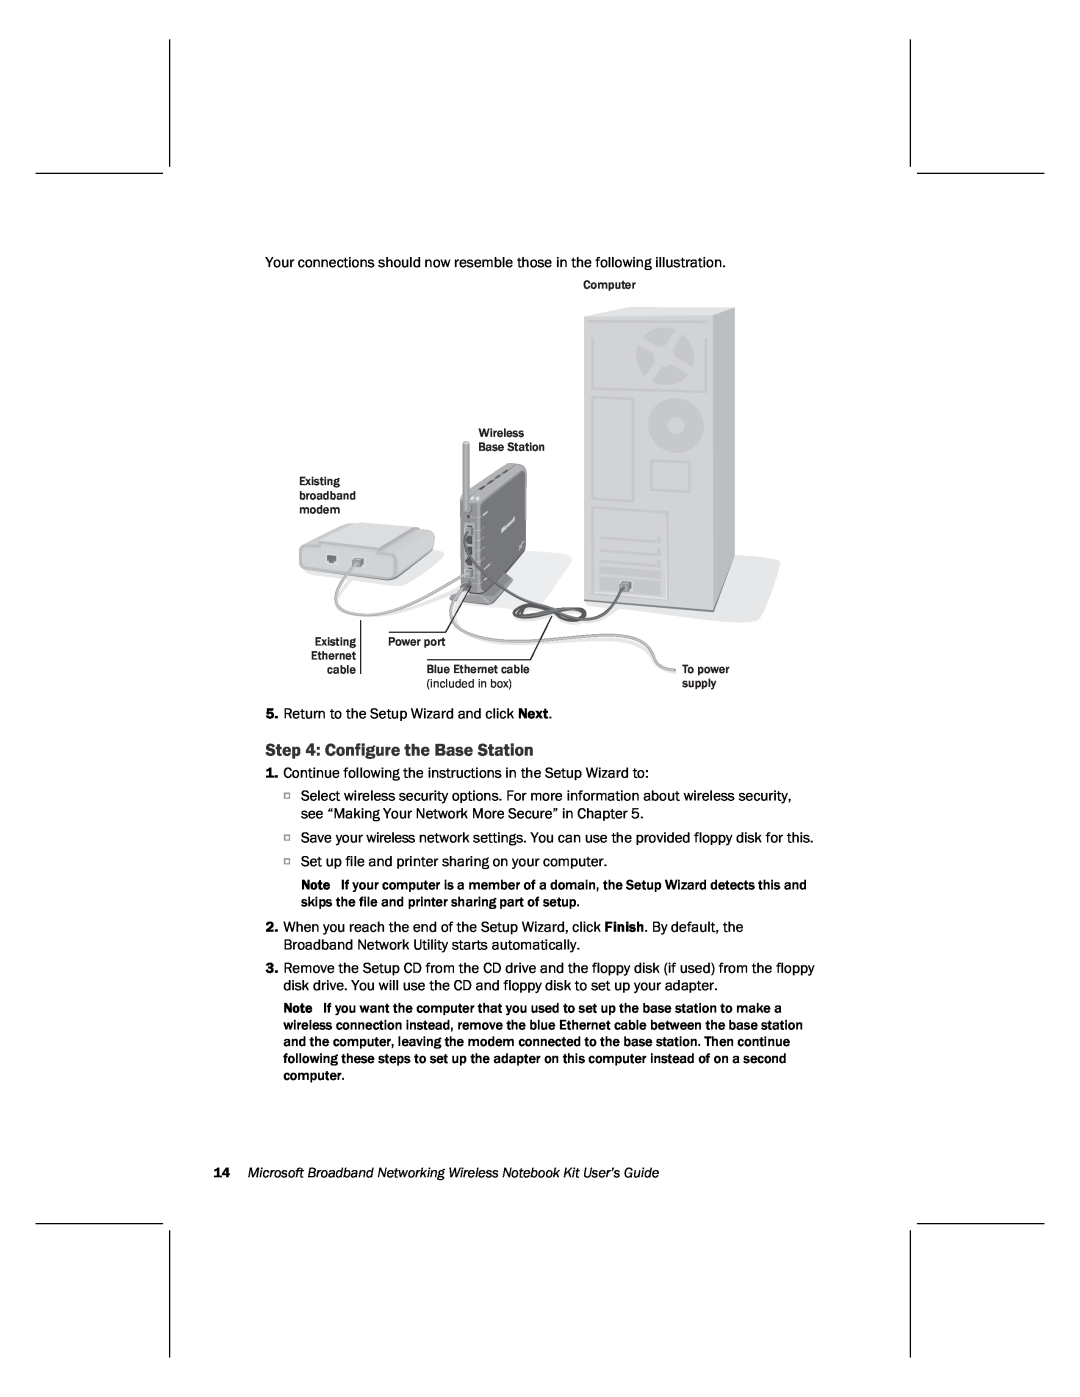 Microsoft MN-820 manual Configure the Base Station, Microsoft Broadband Networking Wireless Notebook Kit User’s Guide 